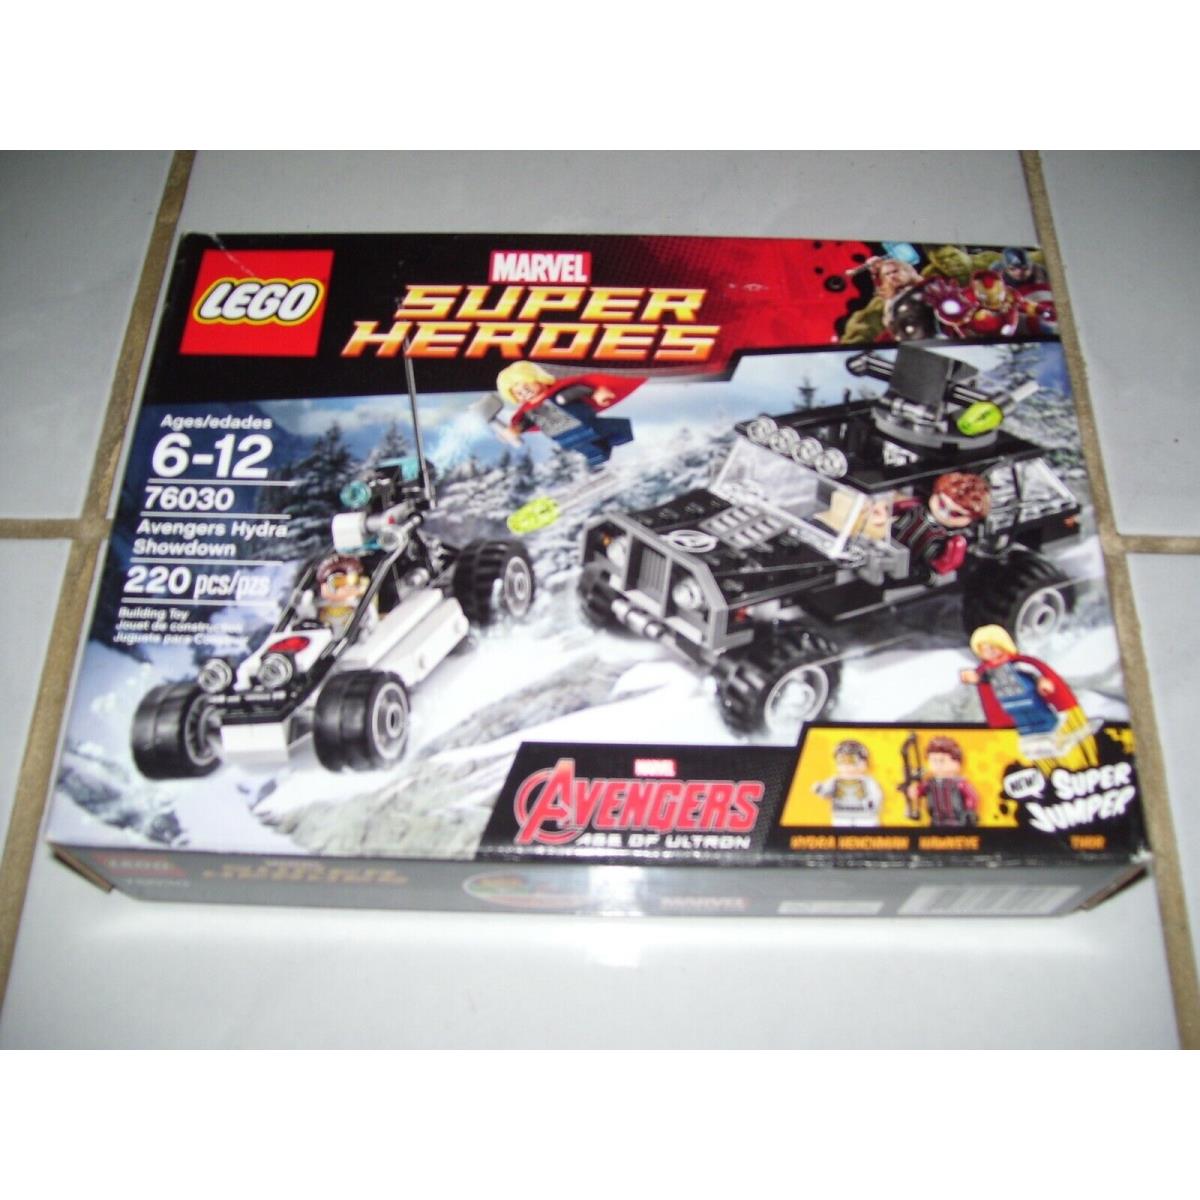 Lego Avengers Hydra Showdown 76030 - Retired Set